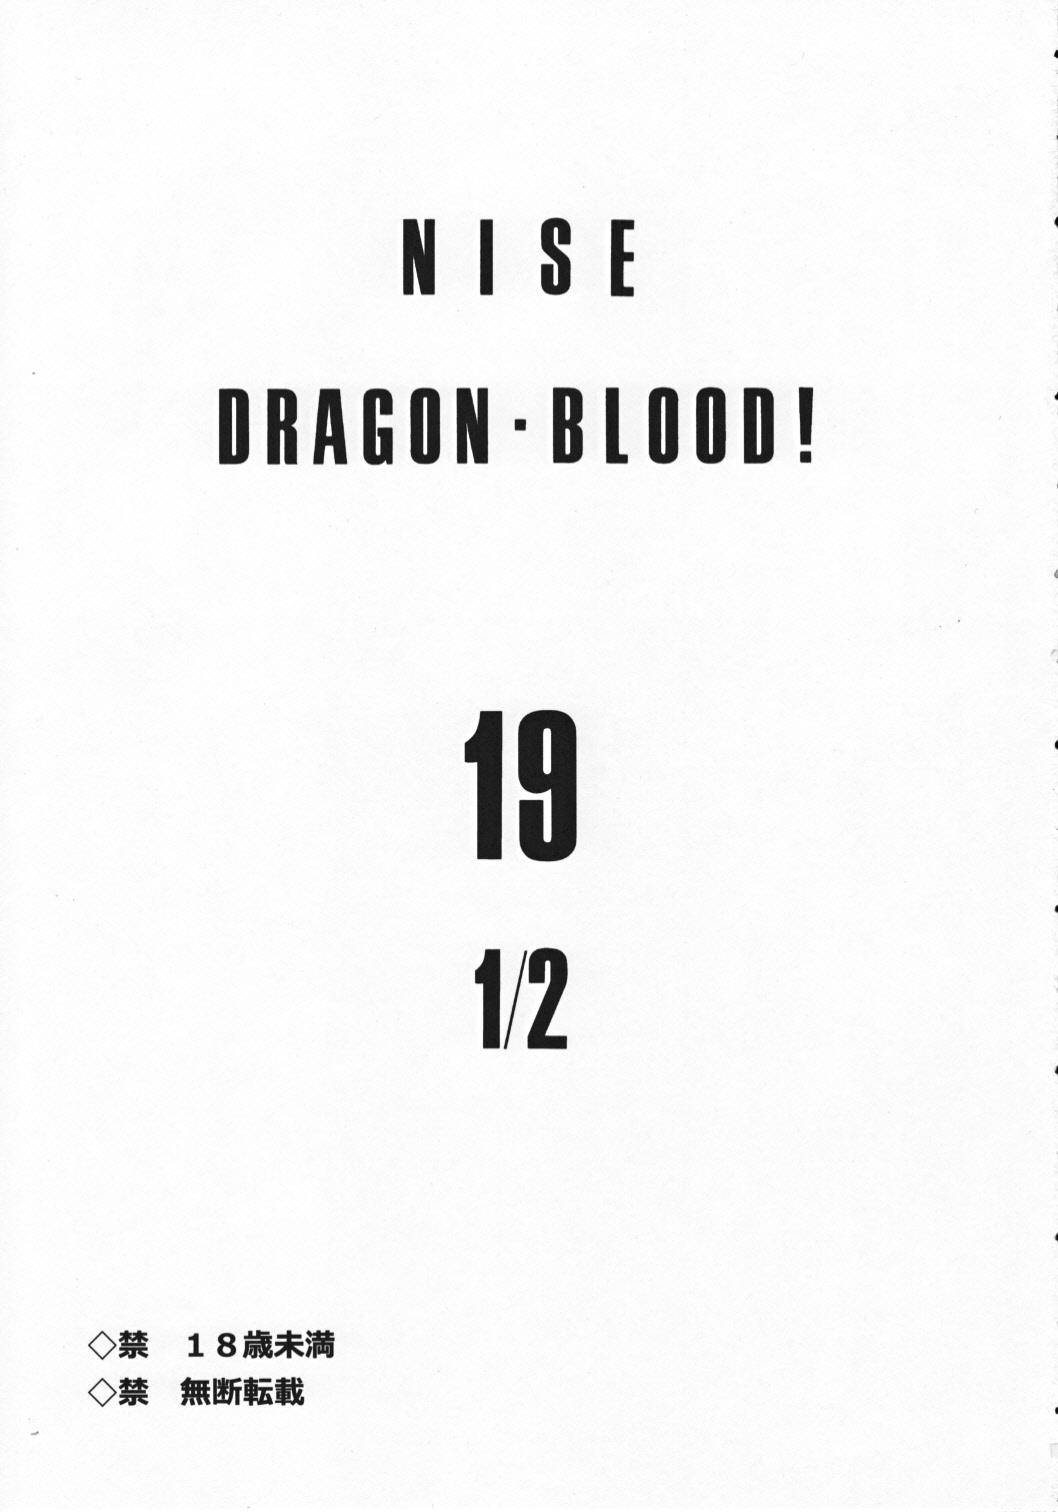 Nise Dragon Blood! 19 1/2 2